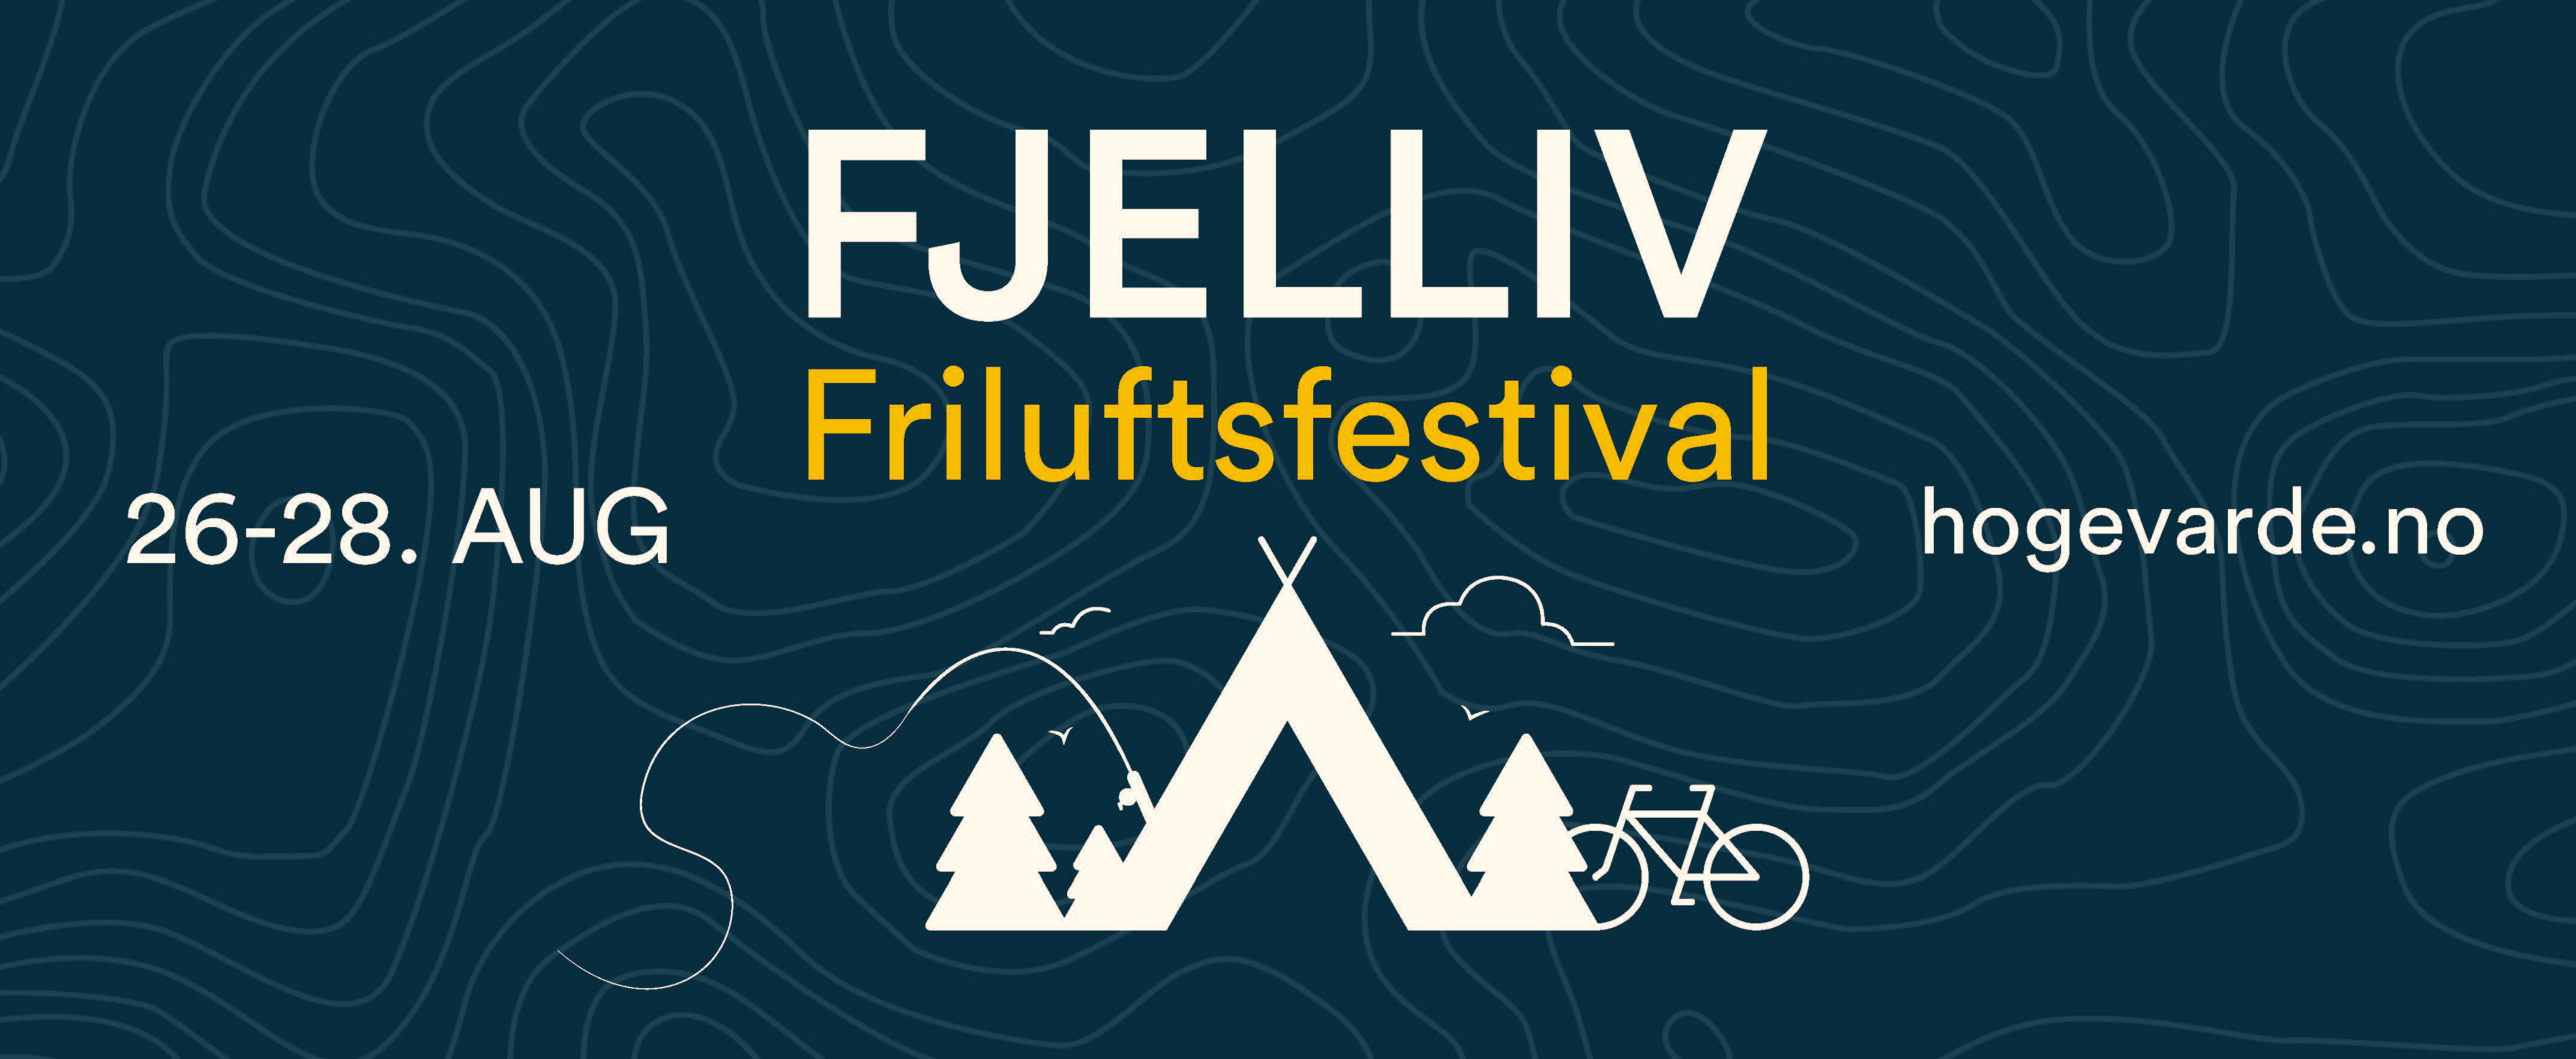 Fjelliv festival 26.-28. aug